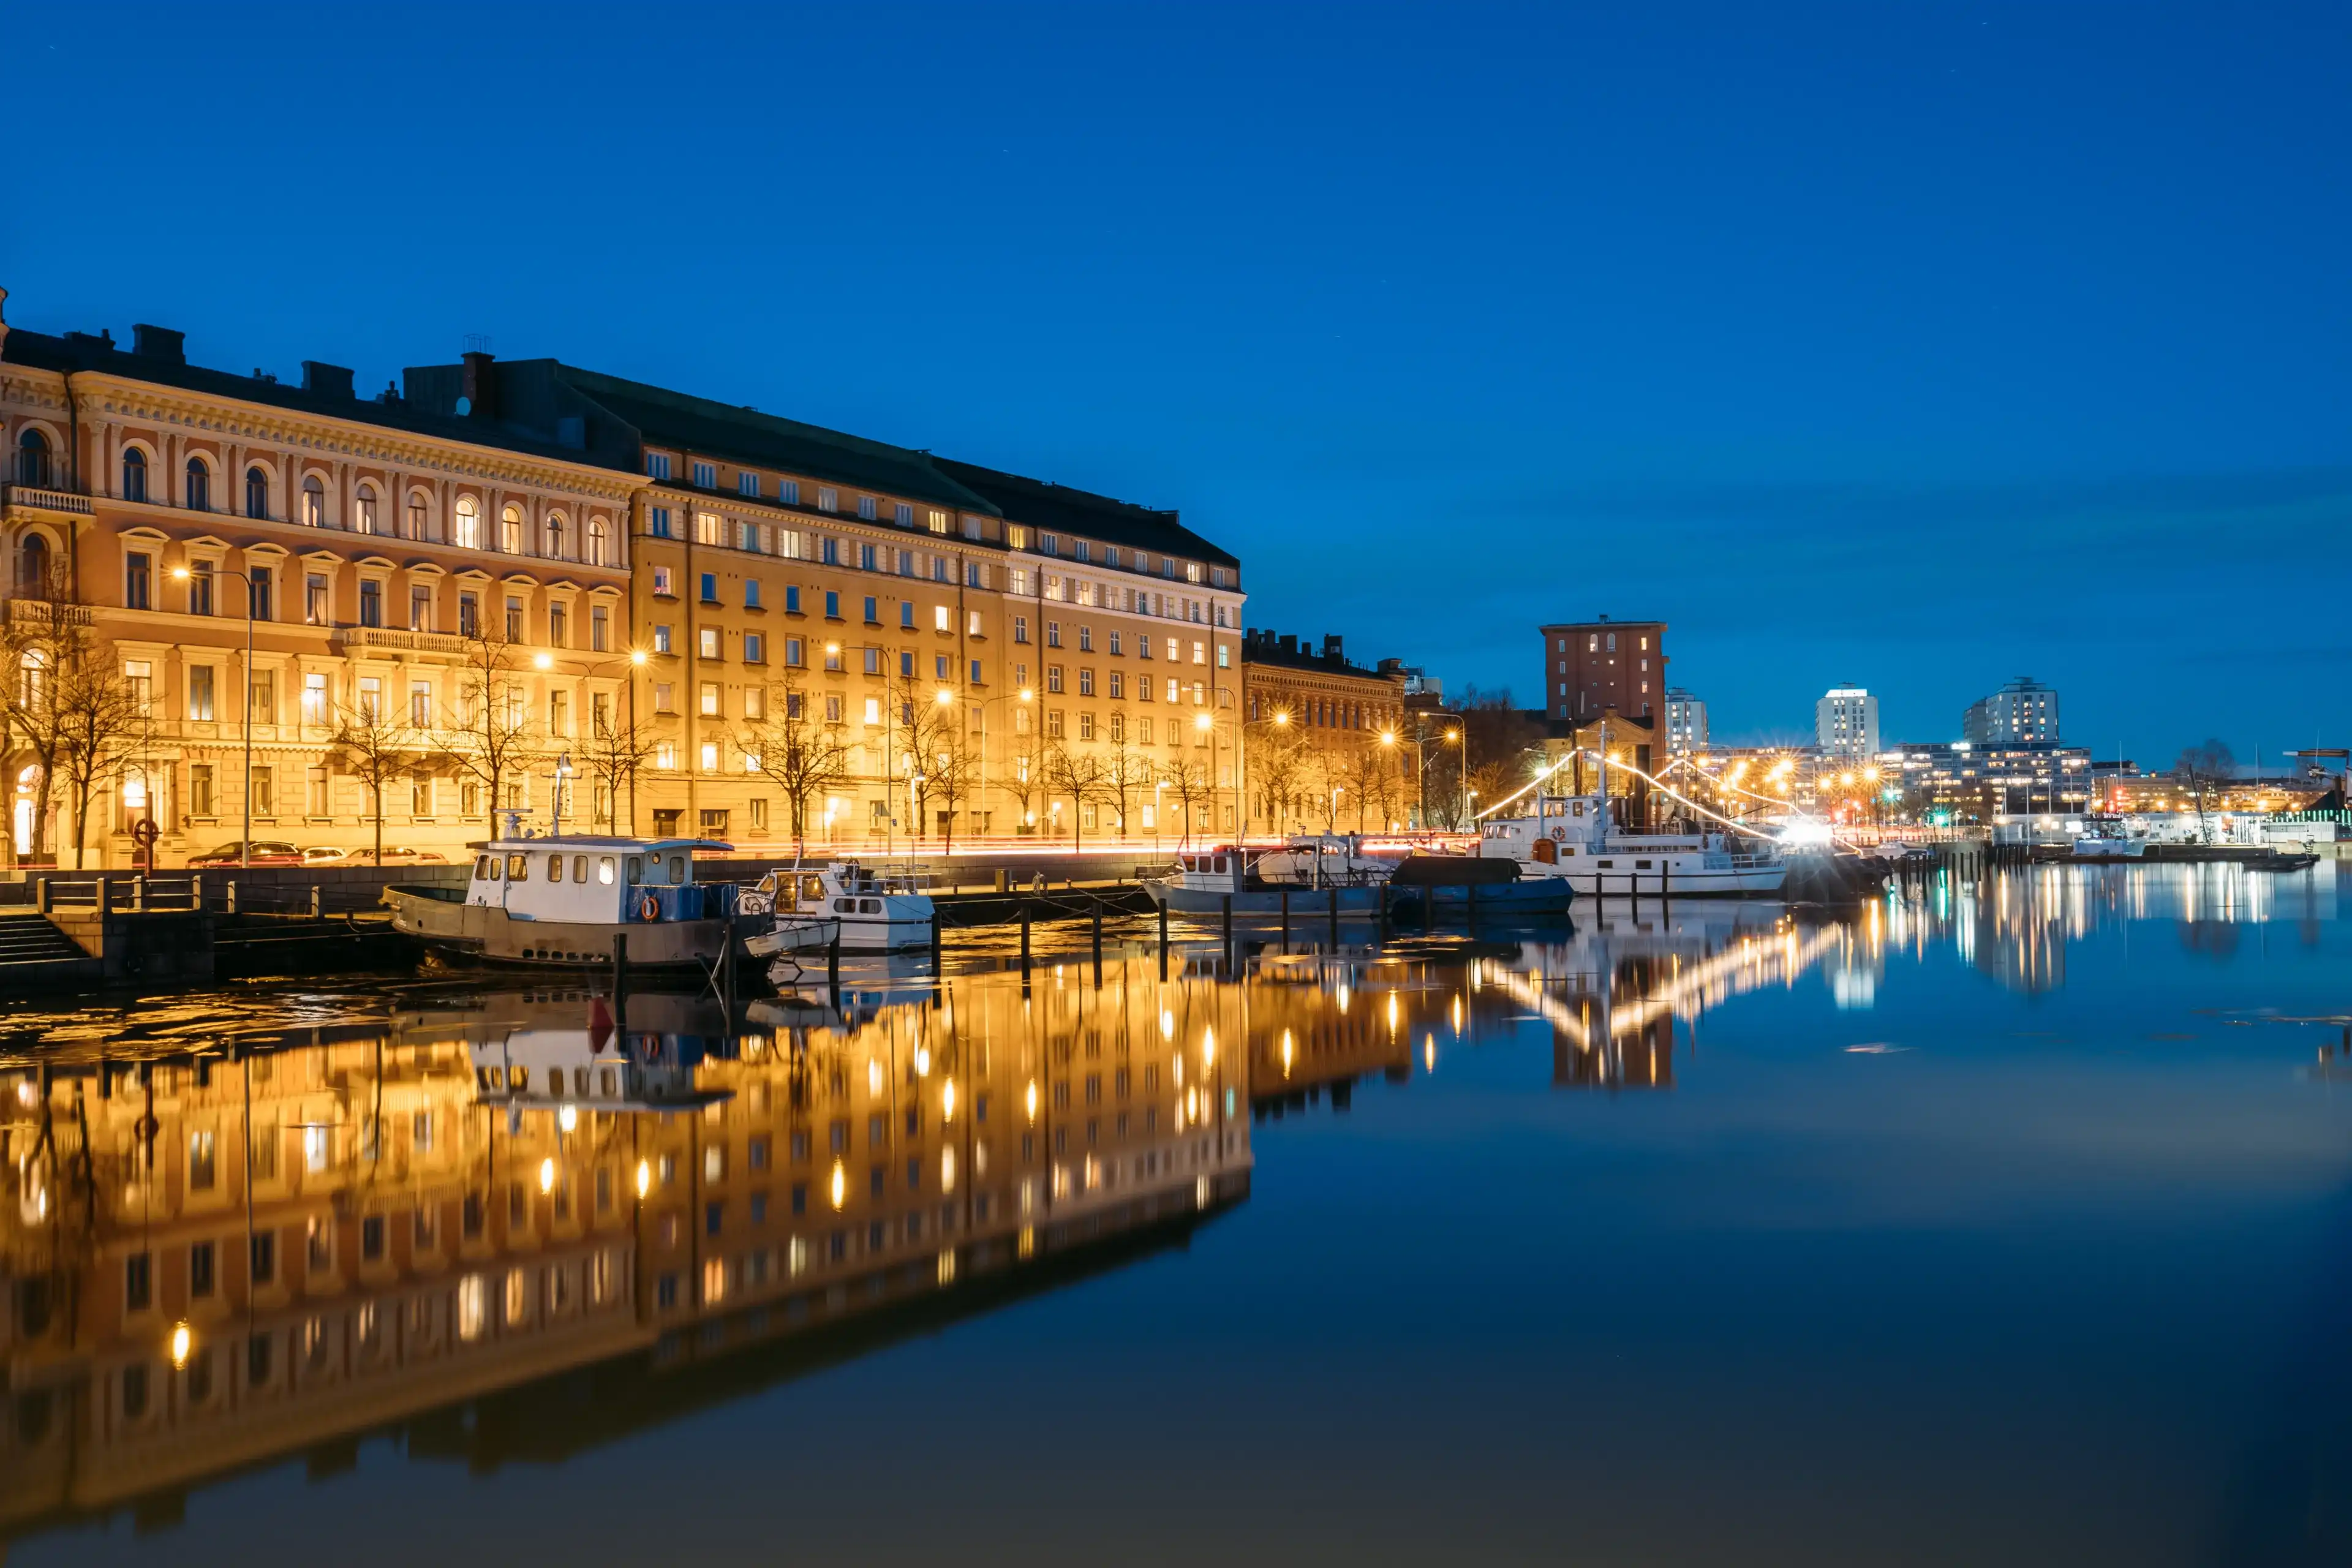 Helsinki, Finland. View Of Pier With Boats And Pohjoisranta Street In Evening Night Illuminations.